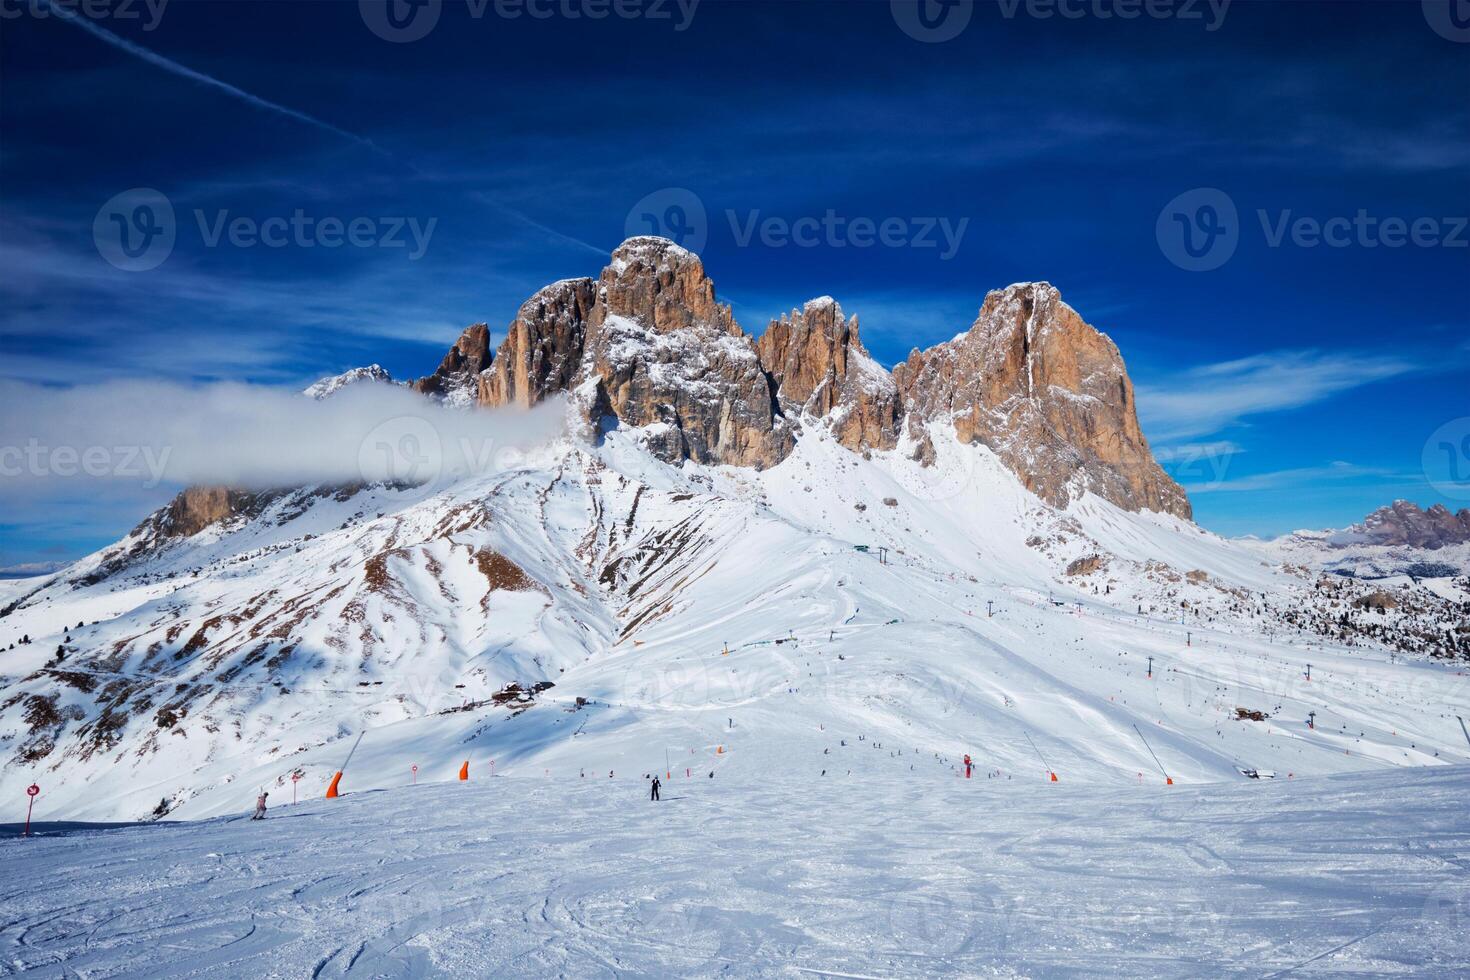 ski toevlucht in dolomieten, Italië foto